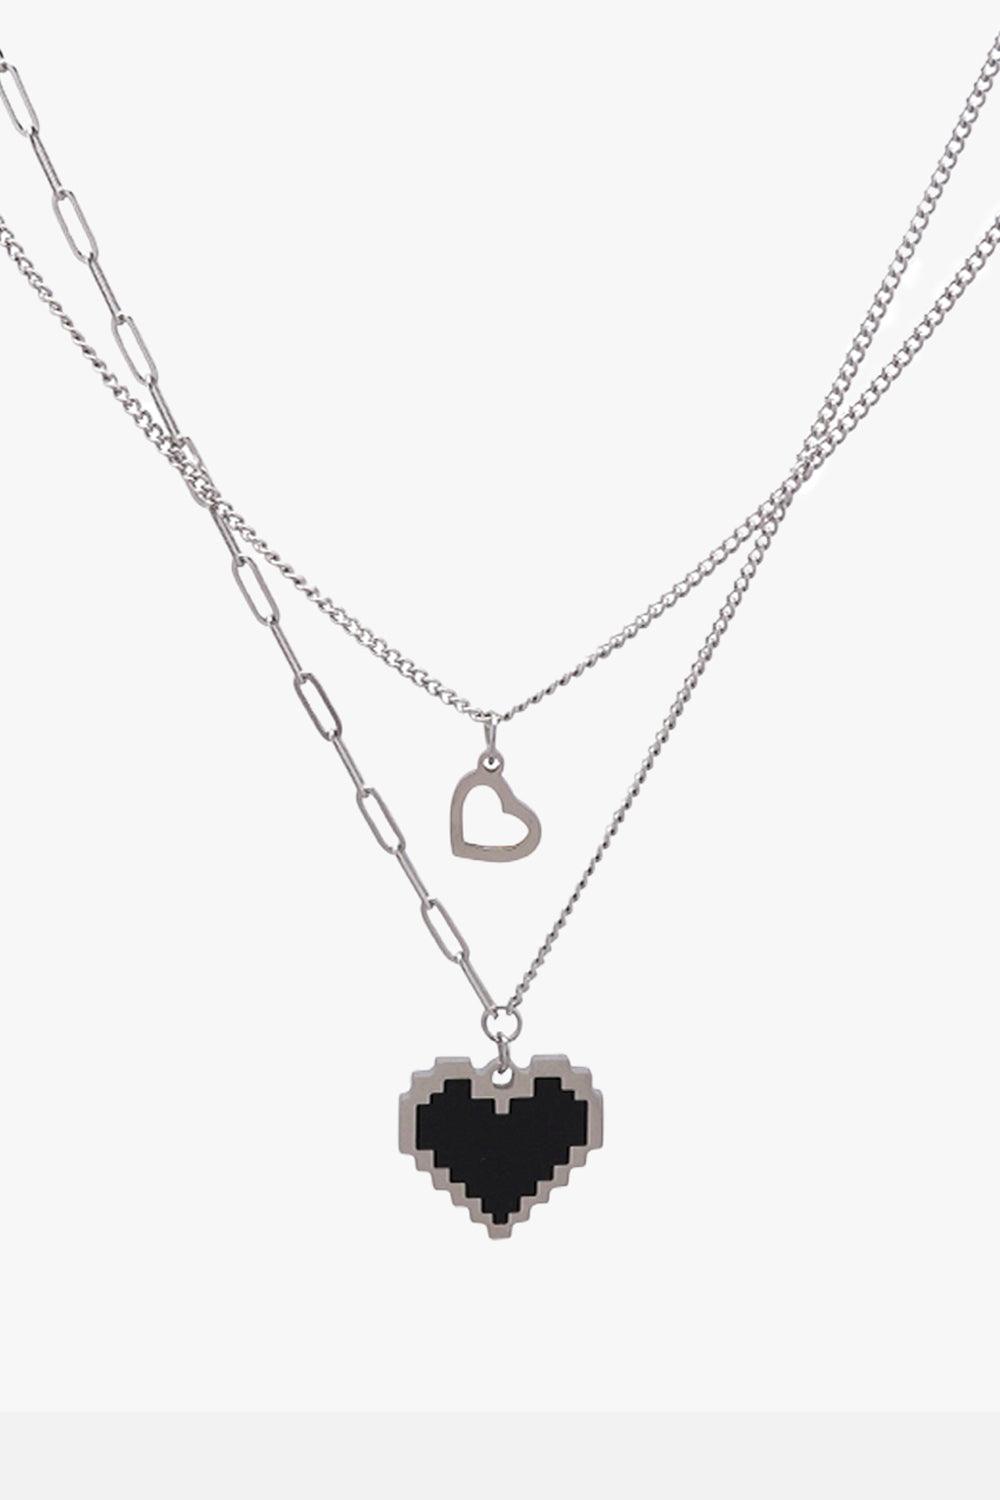 Pixel Heart Double Chain Necklace - Aesthetic Clothes Shop